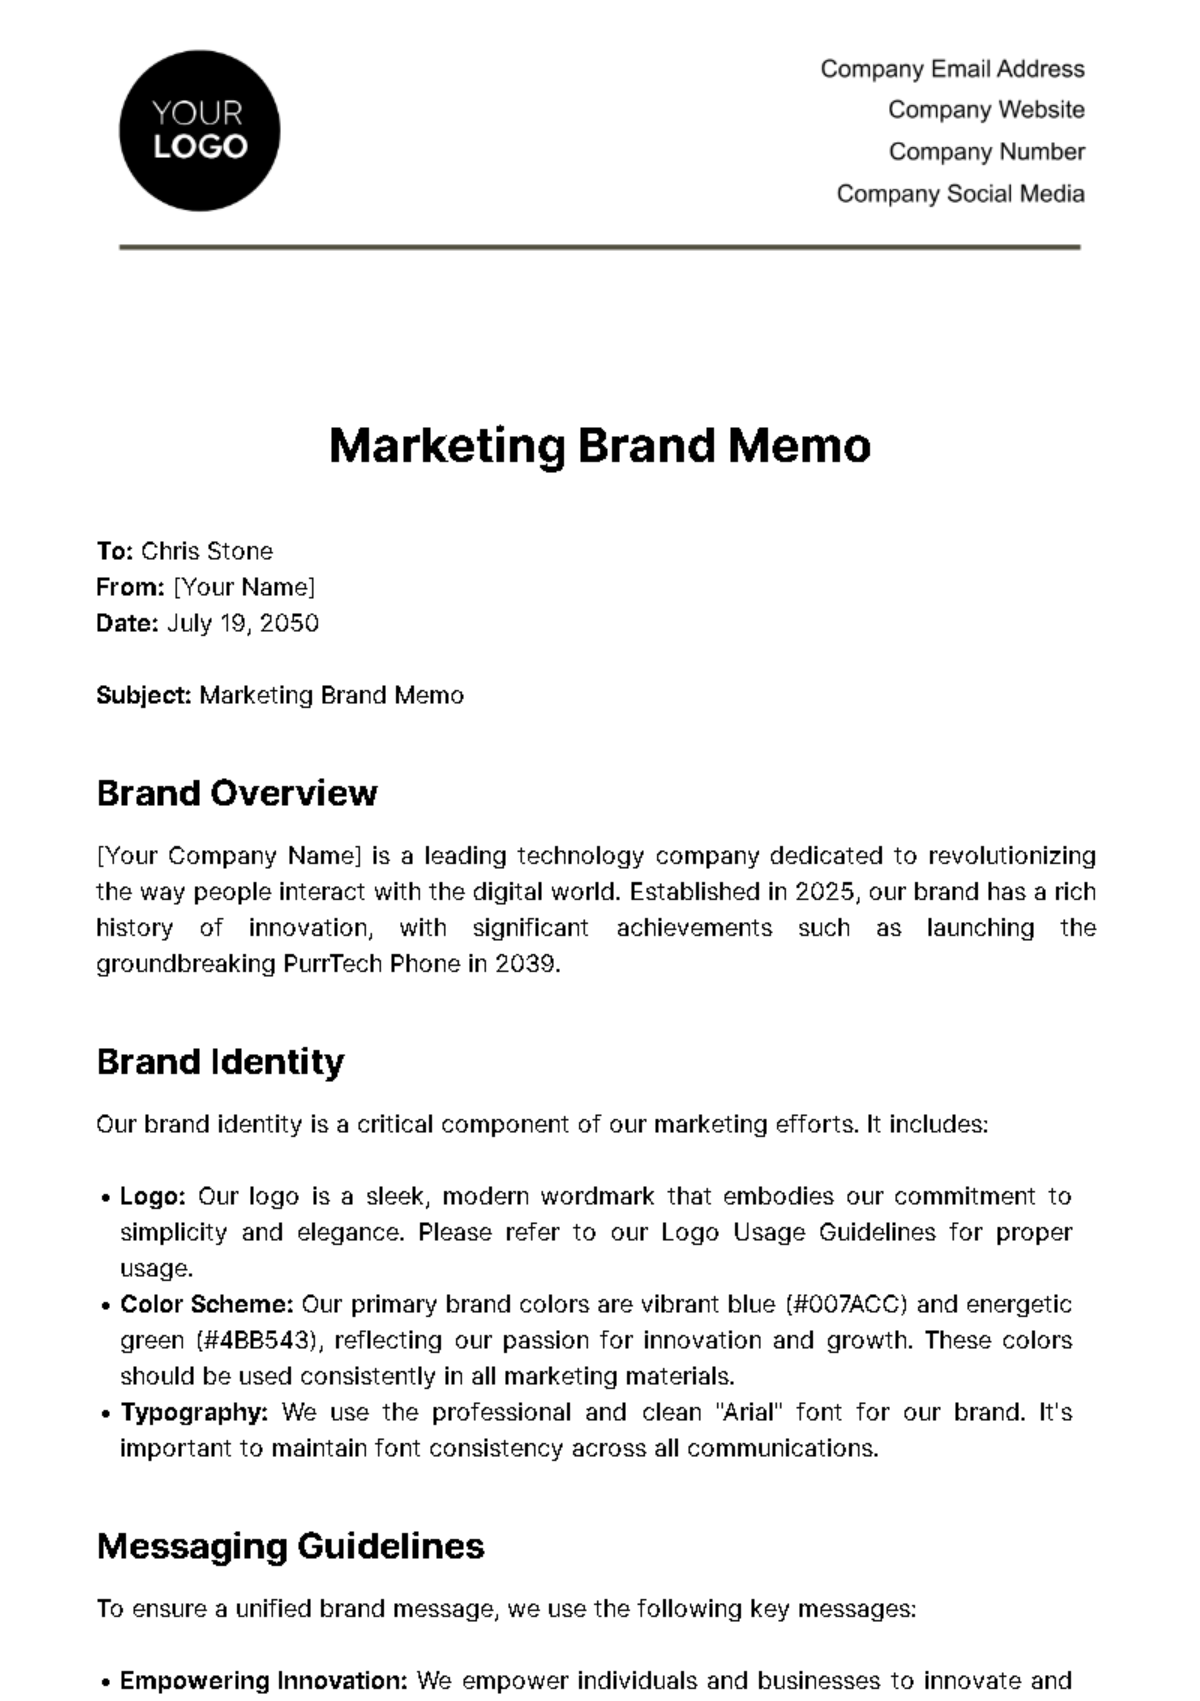 Marketing Brand Memo Template